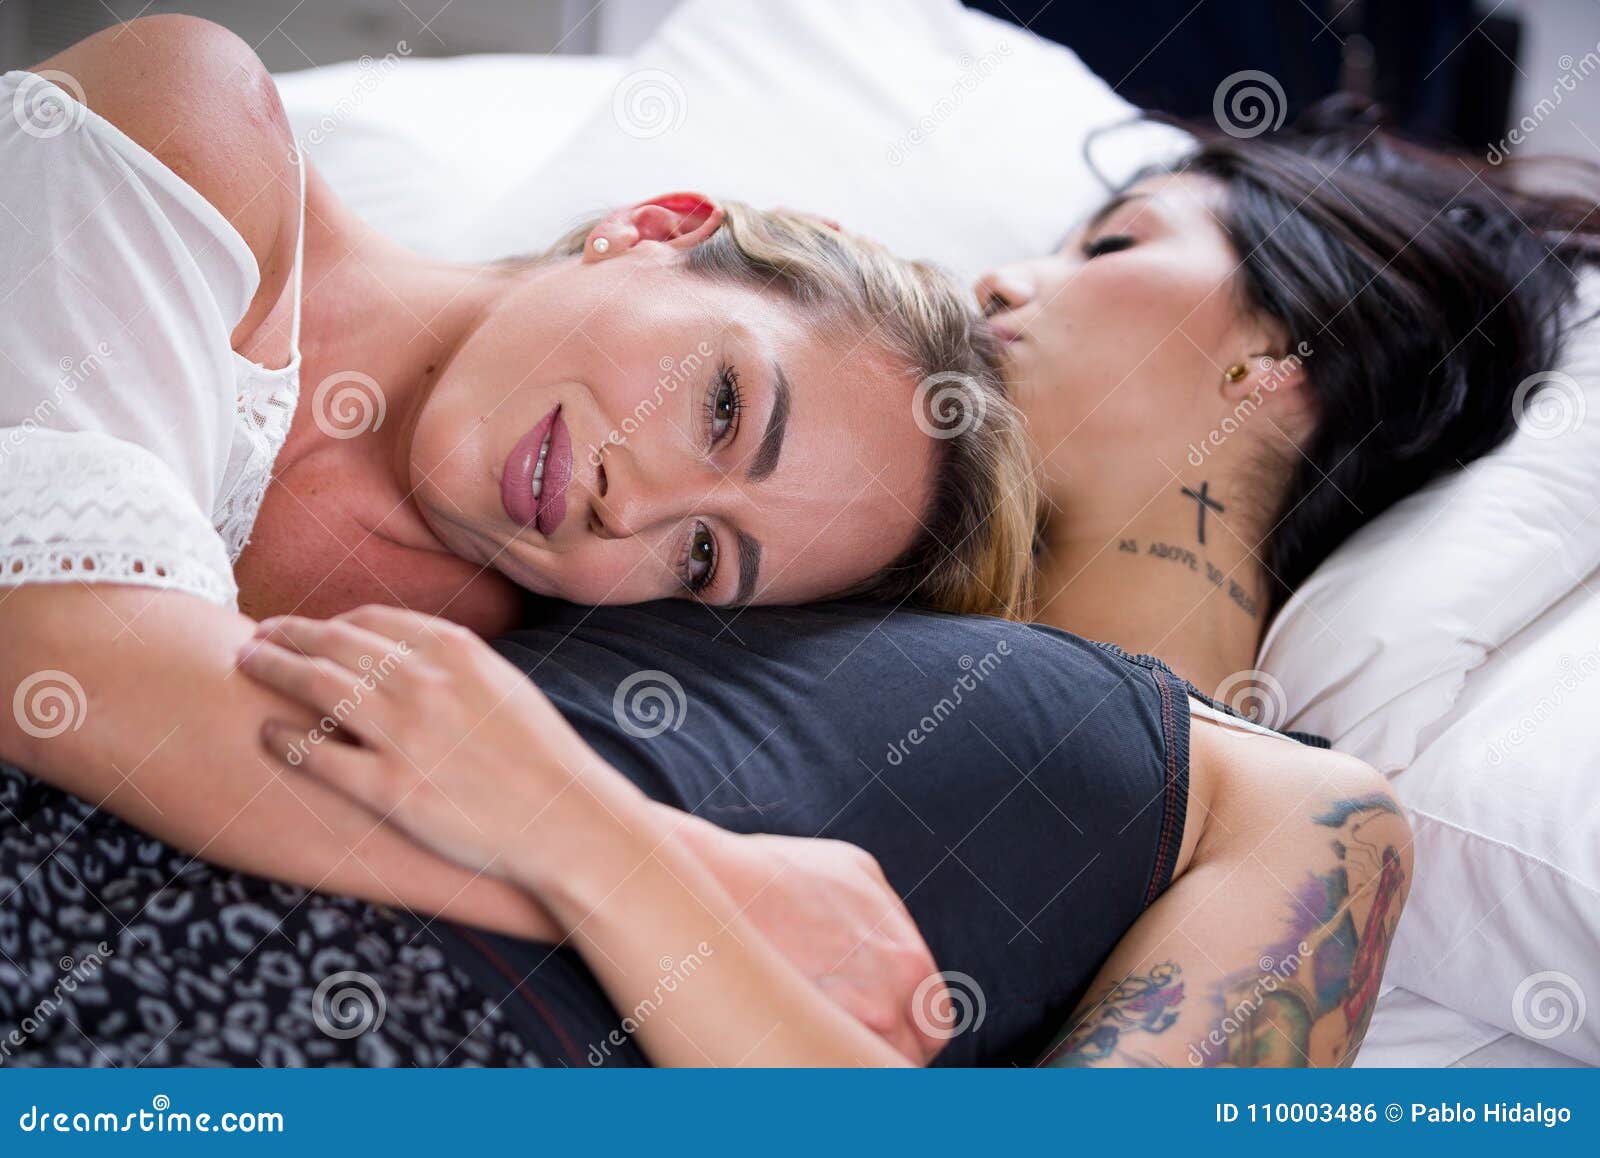 my girlfriend sleep lesbian Porn Photos